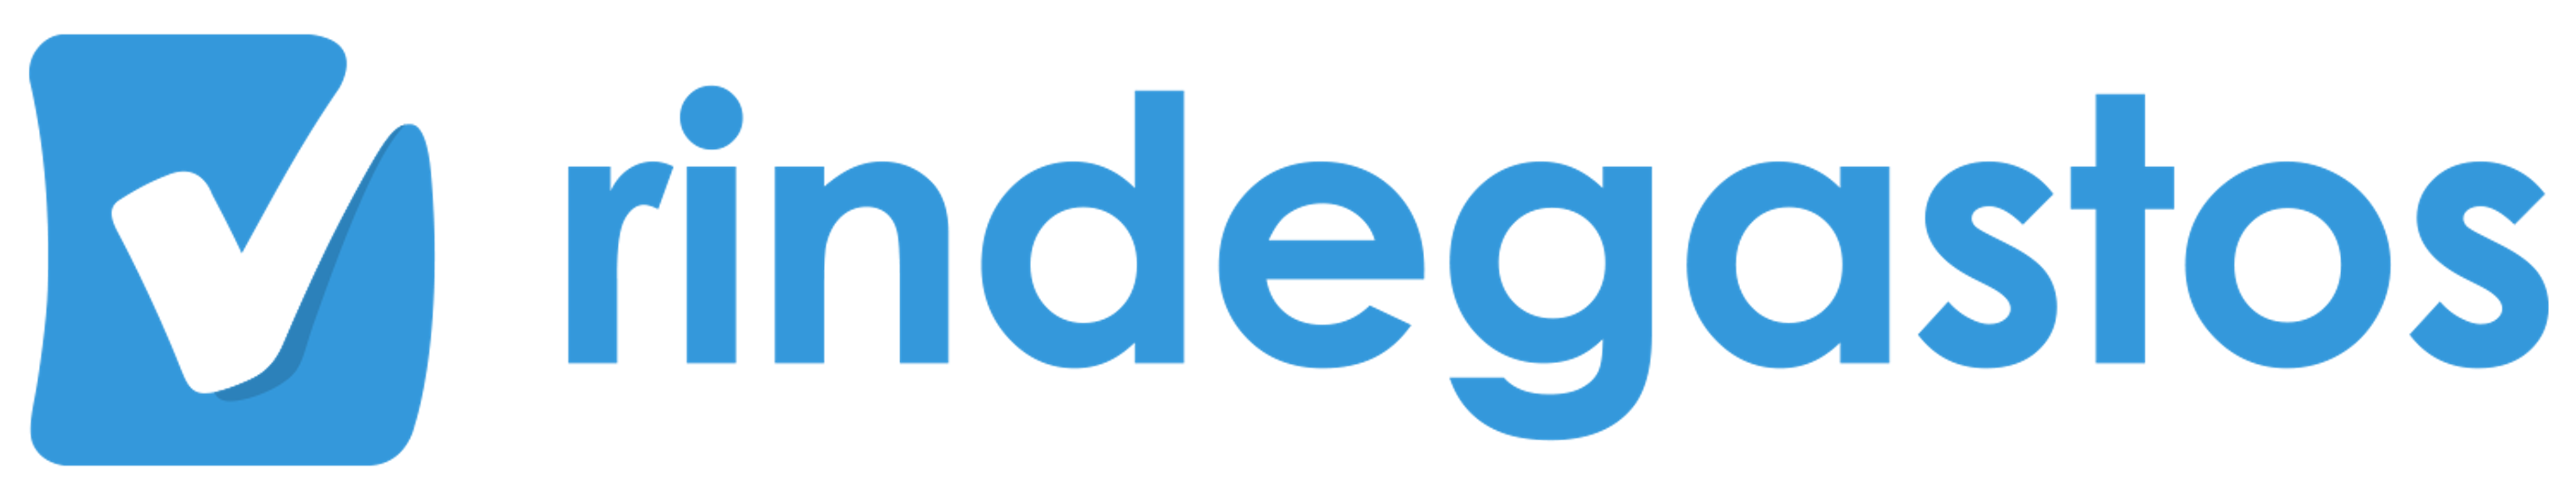 Rindegastos Logo